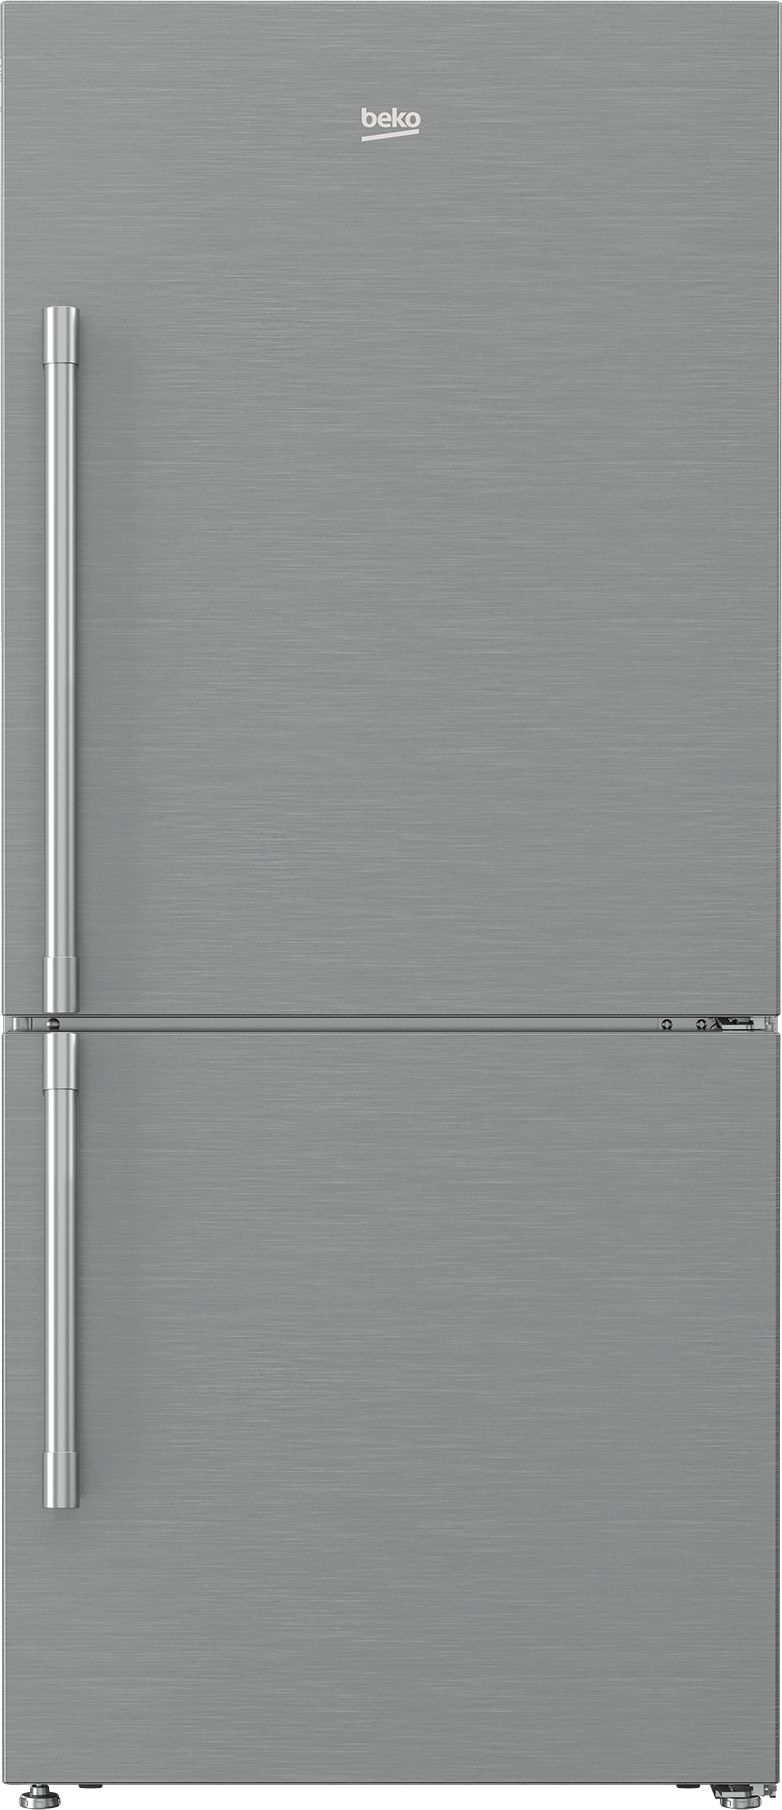 Front view of the Beko BFBF3018SS bottom freezer refrigerator